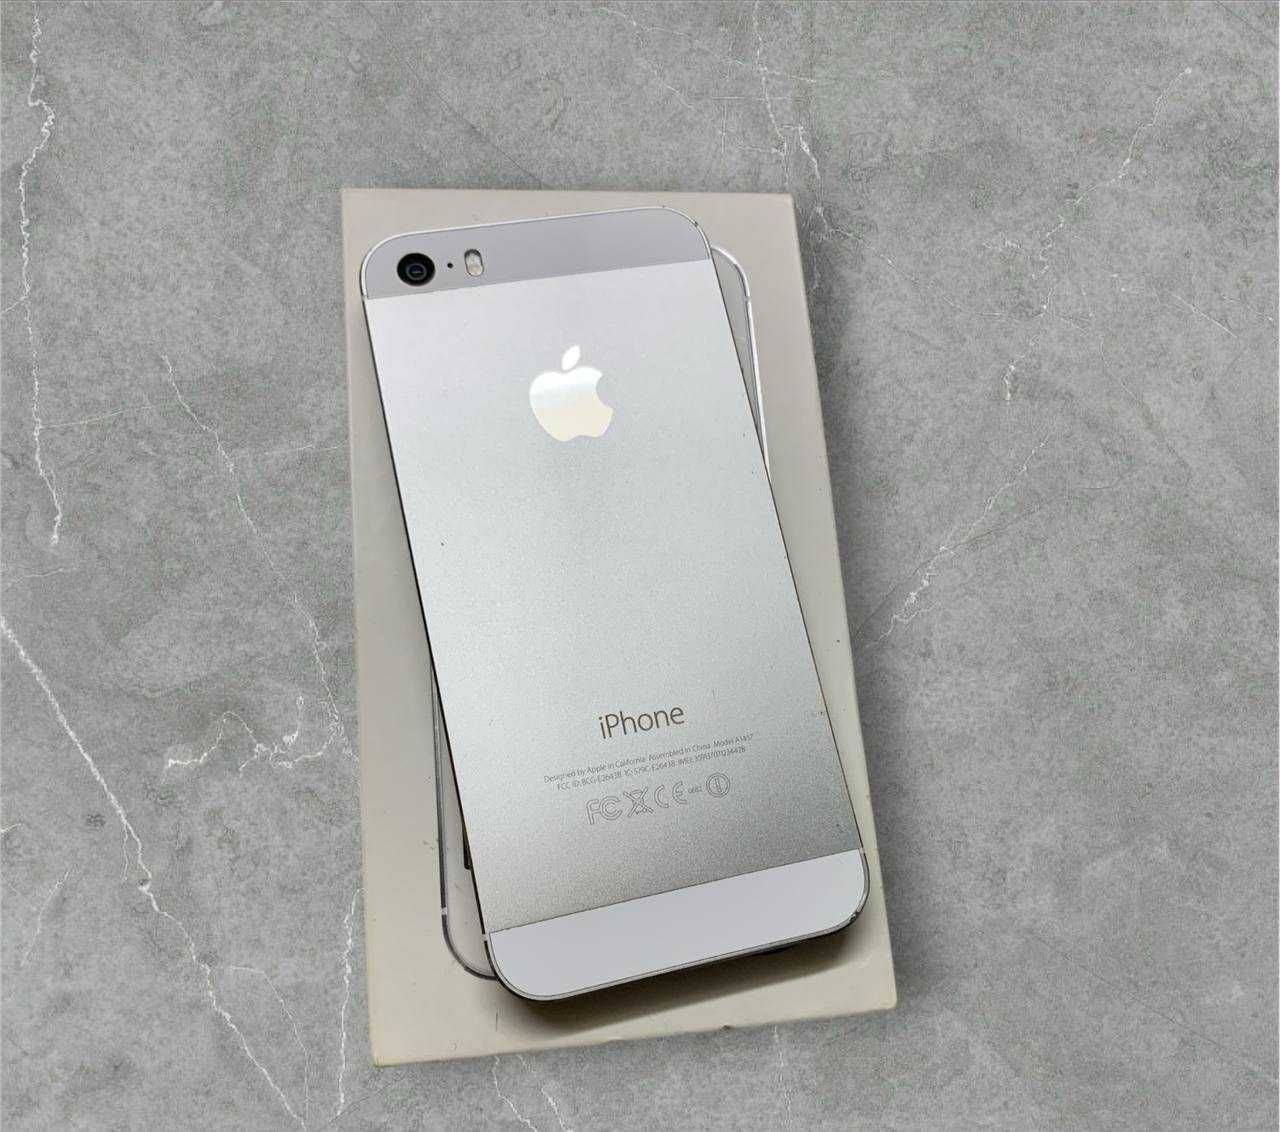 Apple iPhone 5S 16GB silver white Neverlock